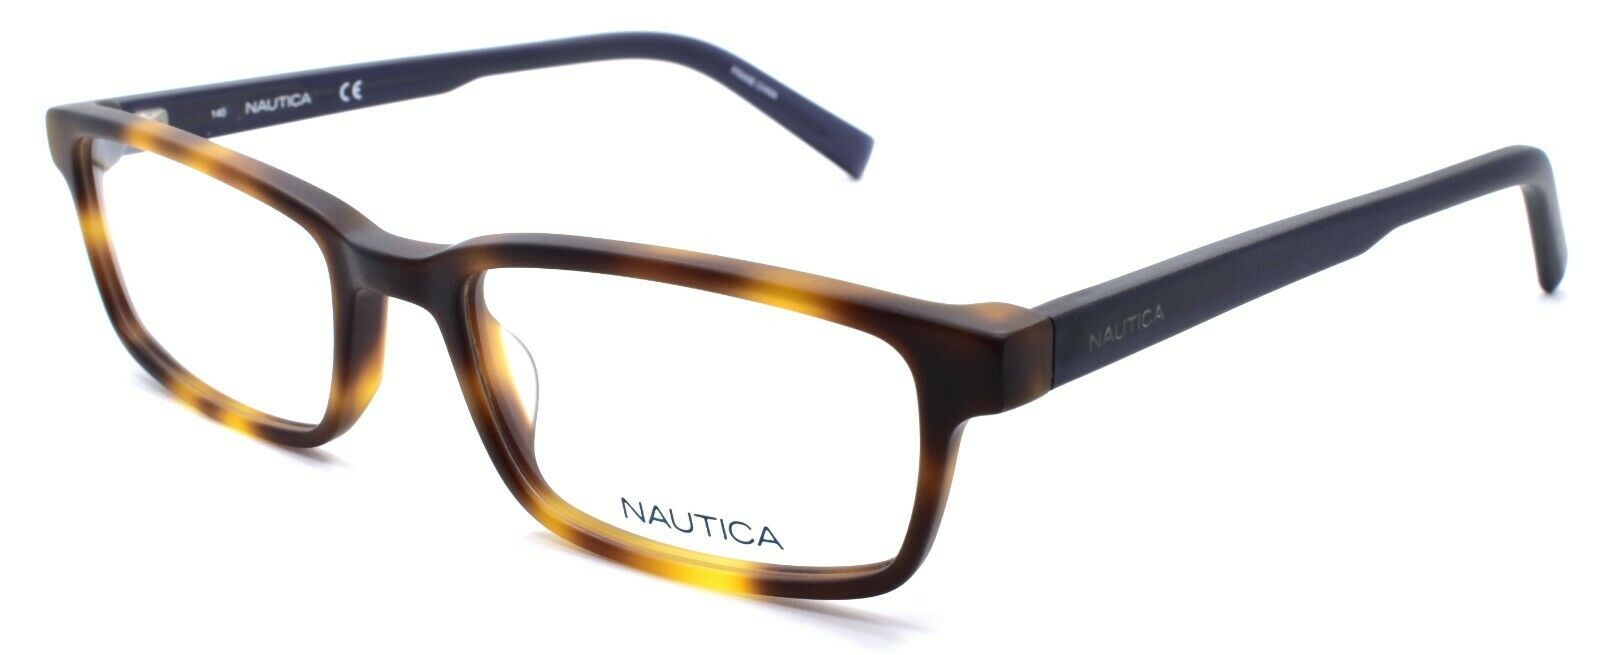 1-Nautica N8146 251 Men's Eyeglasses Frames 53-18-140 Matte Soft Tortoise-688940460506-IKSpecs